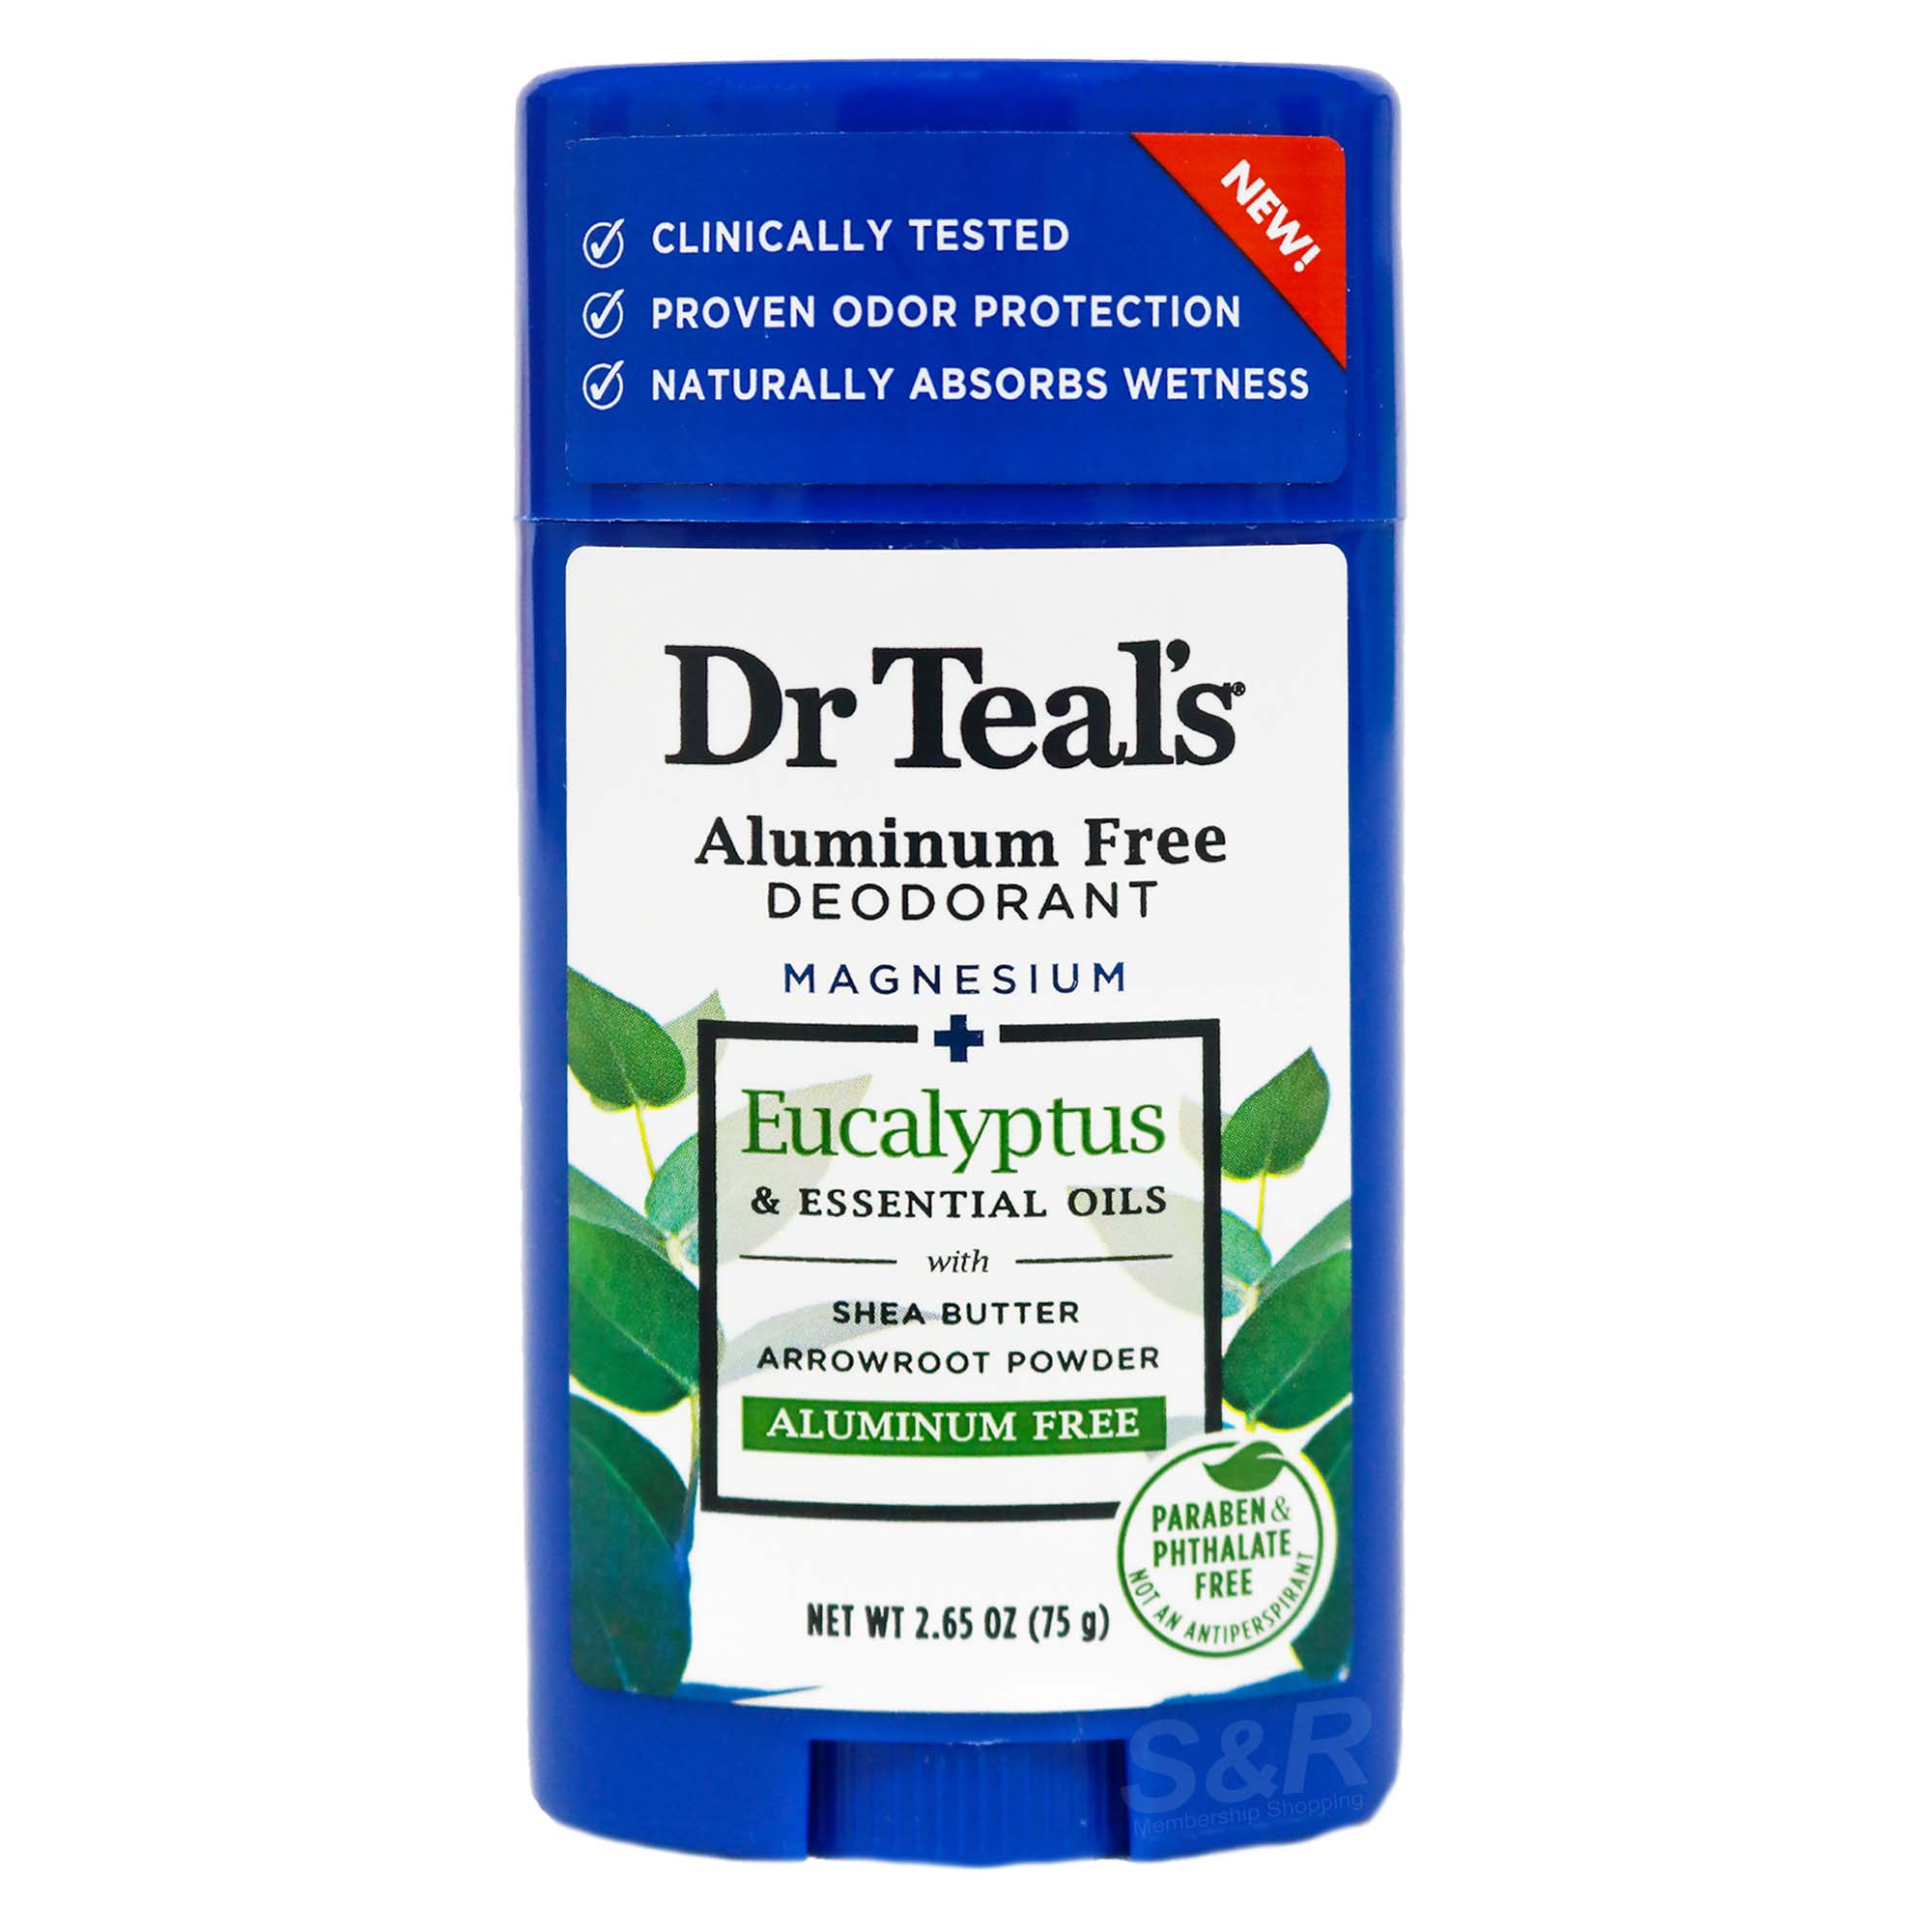 Dr. Teal’s Aluminum-Free Deodorant with Eucalyptus 75g